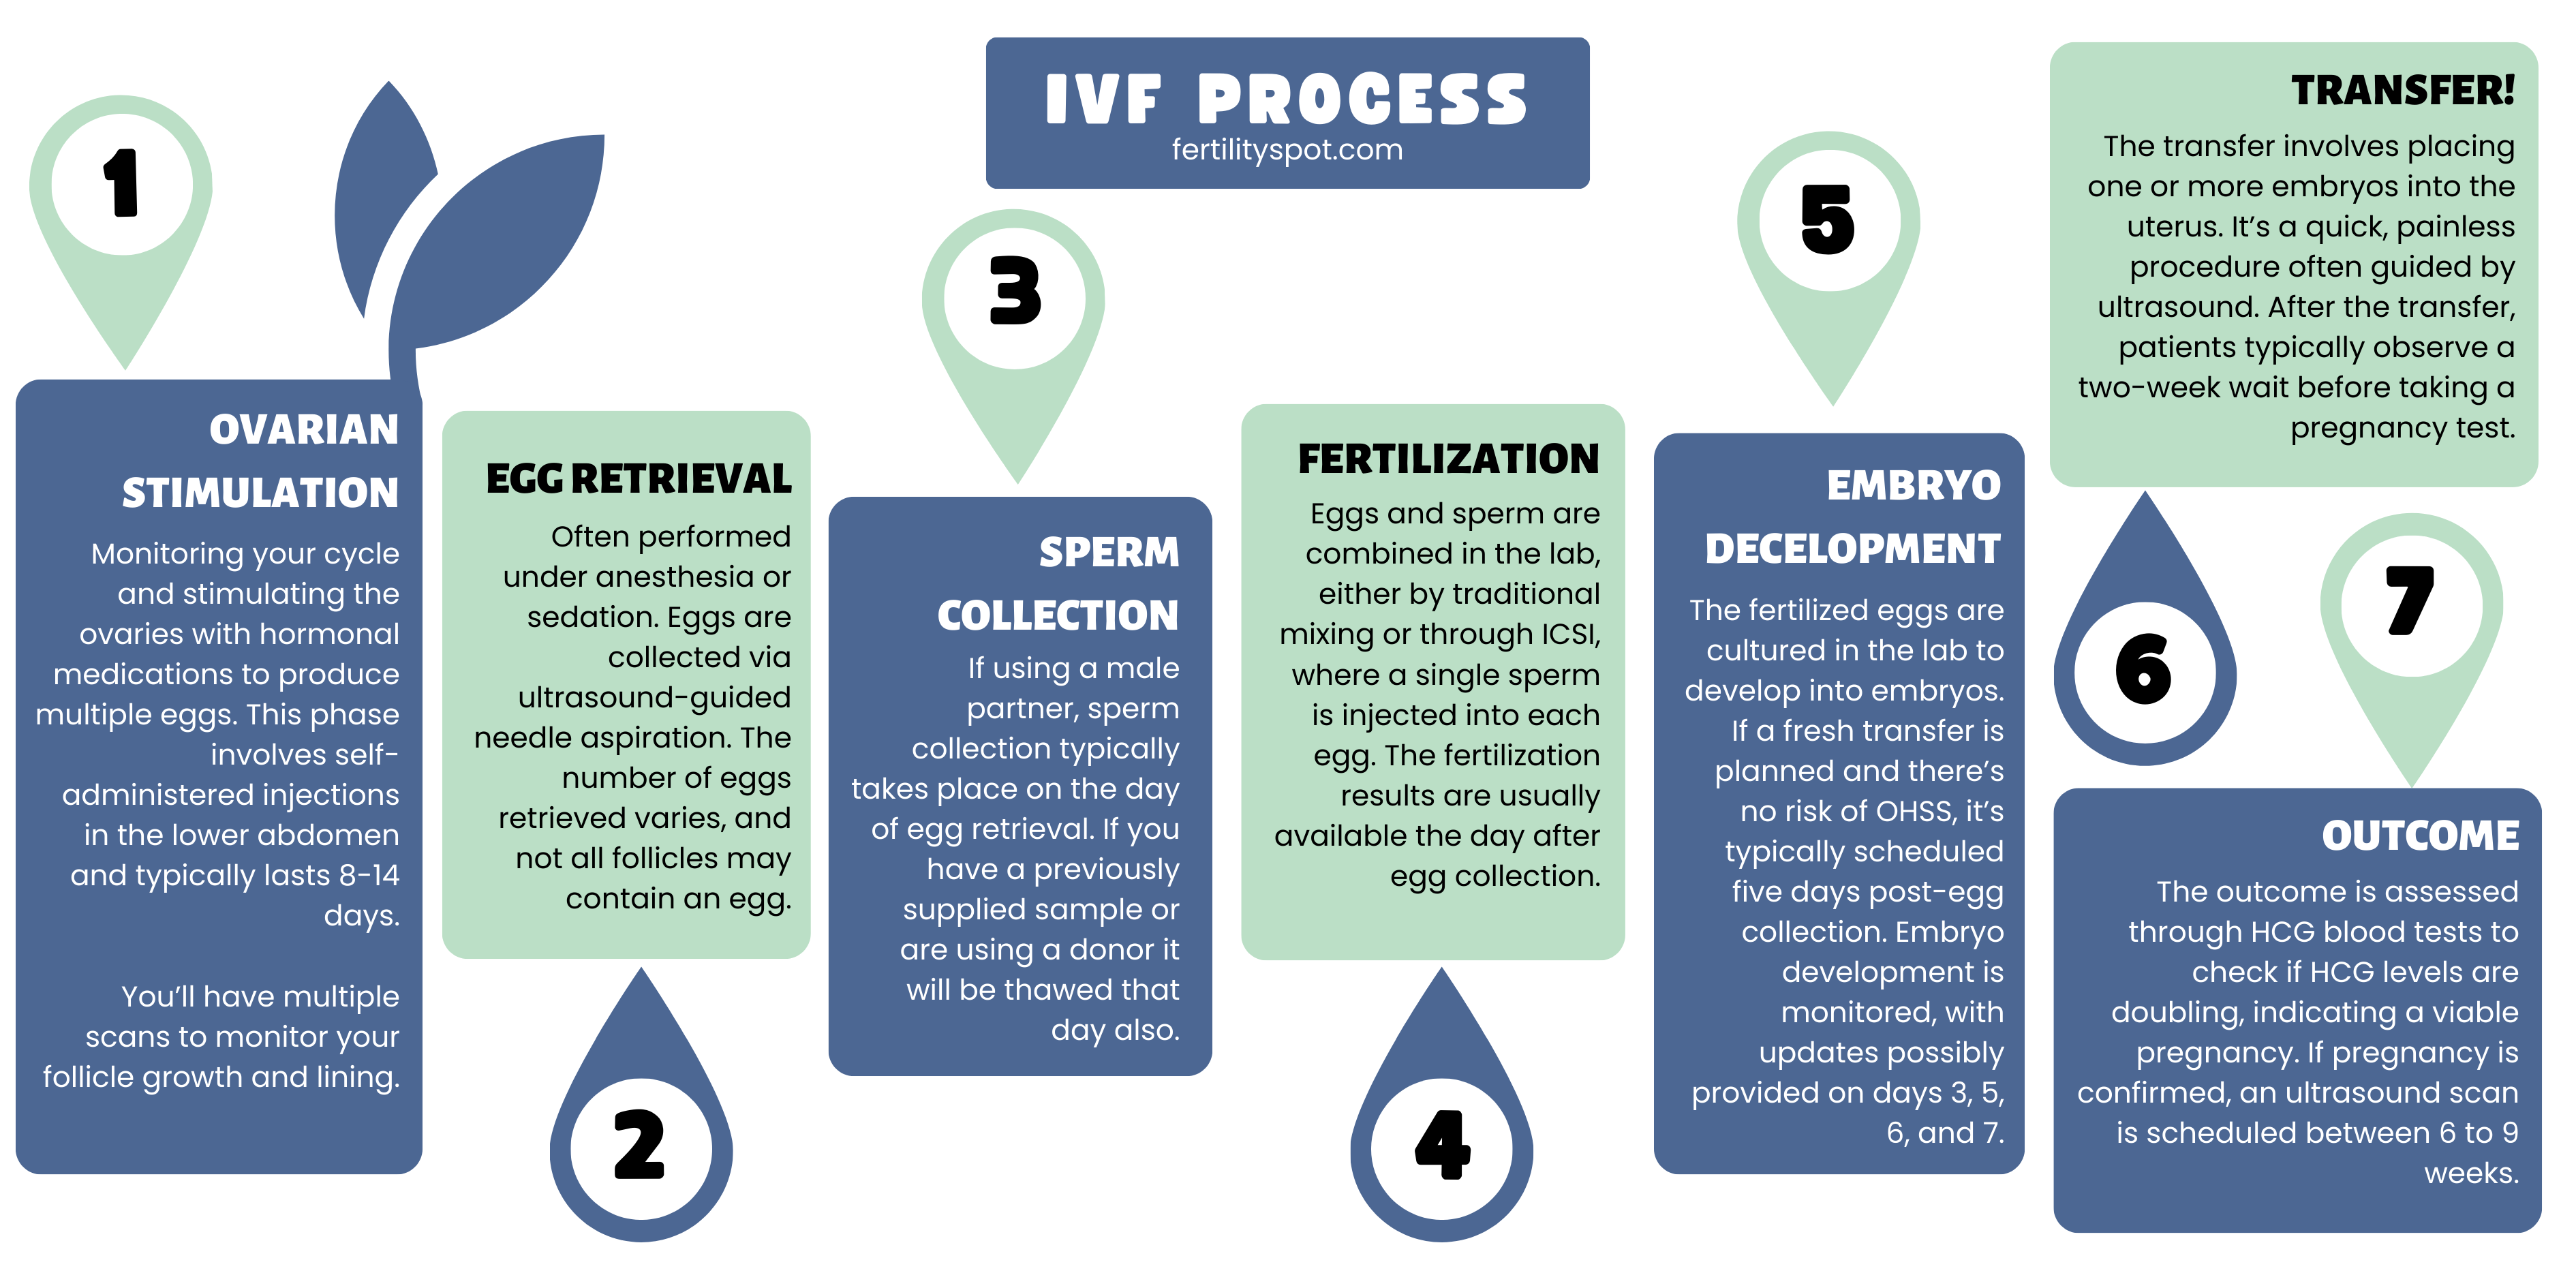 Fertility Spot IVF Process Infographic